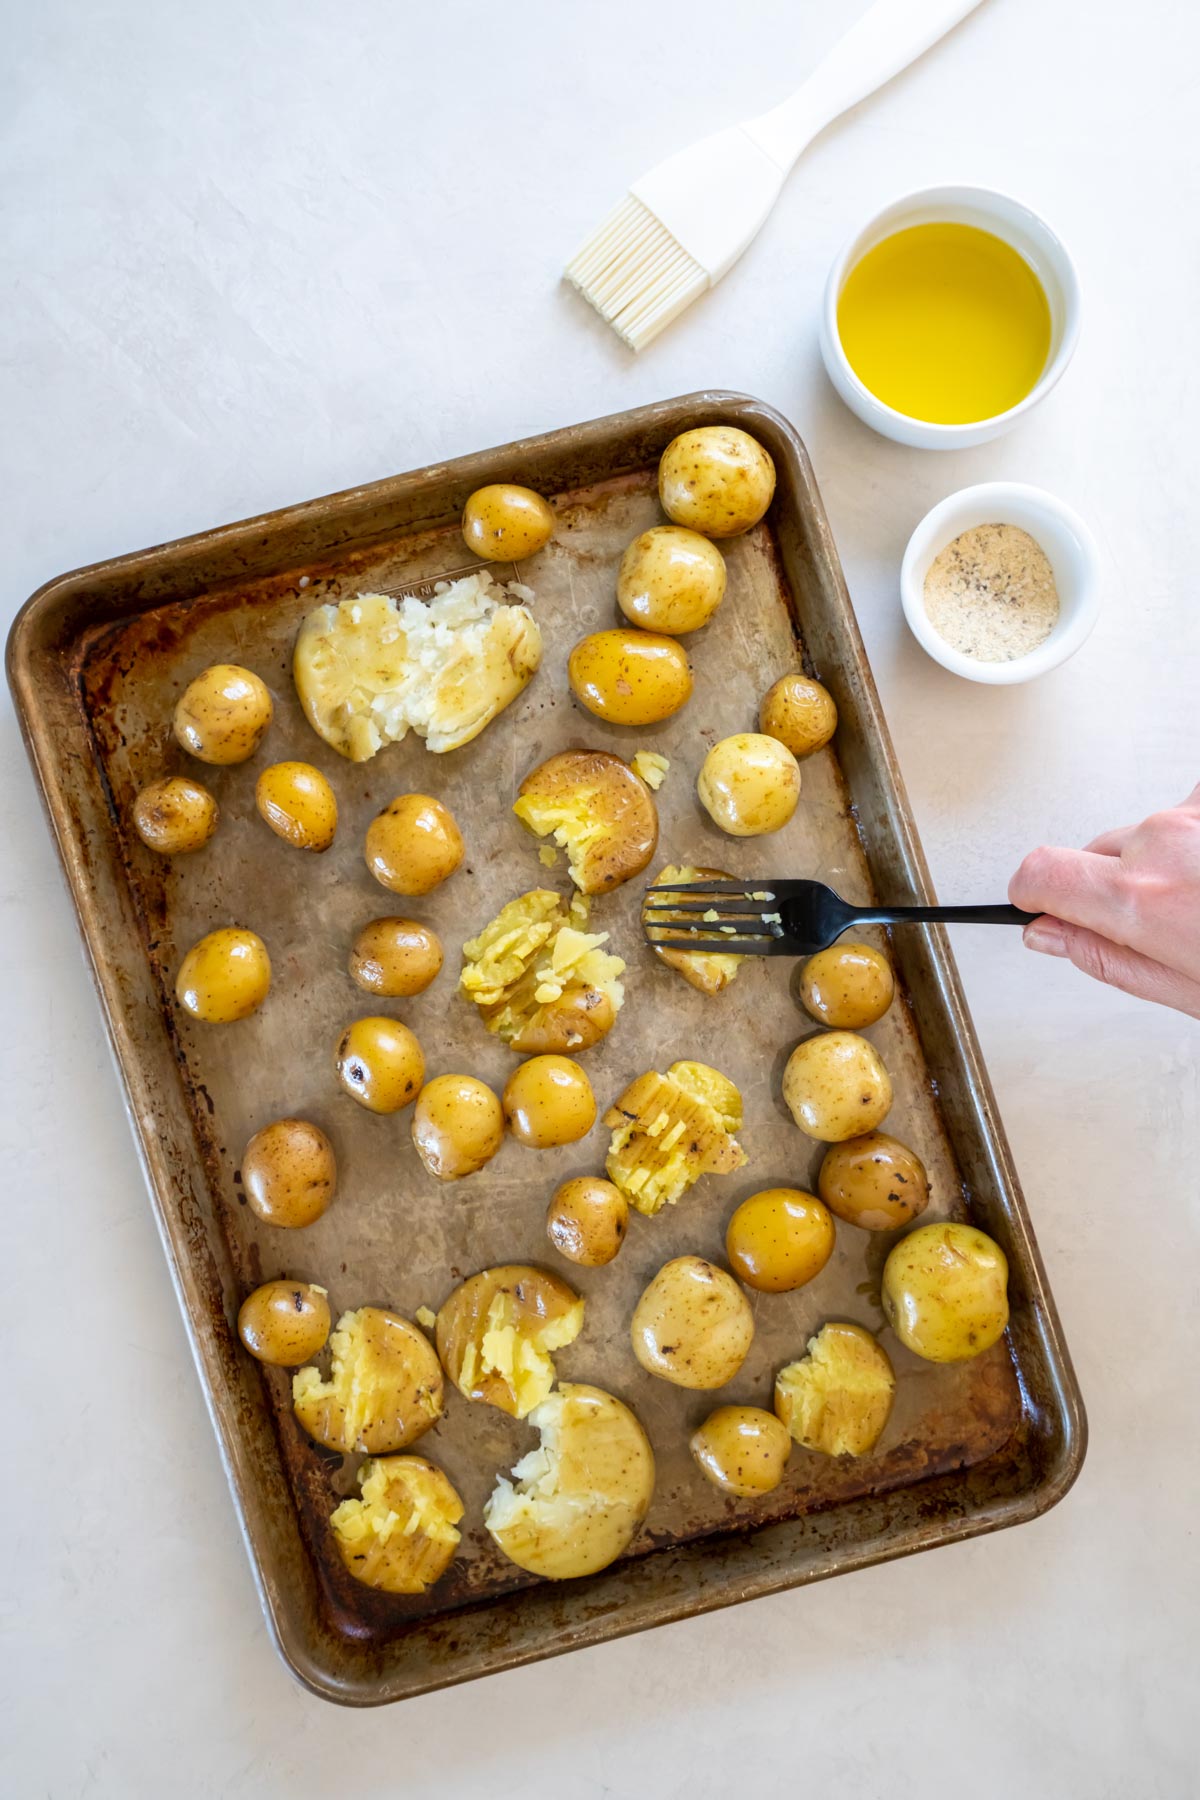 Smashing potatoes on baking sheet with a fork.